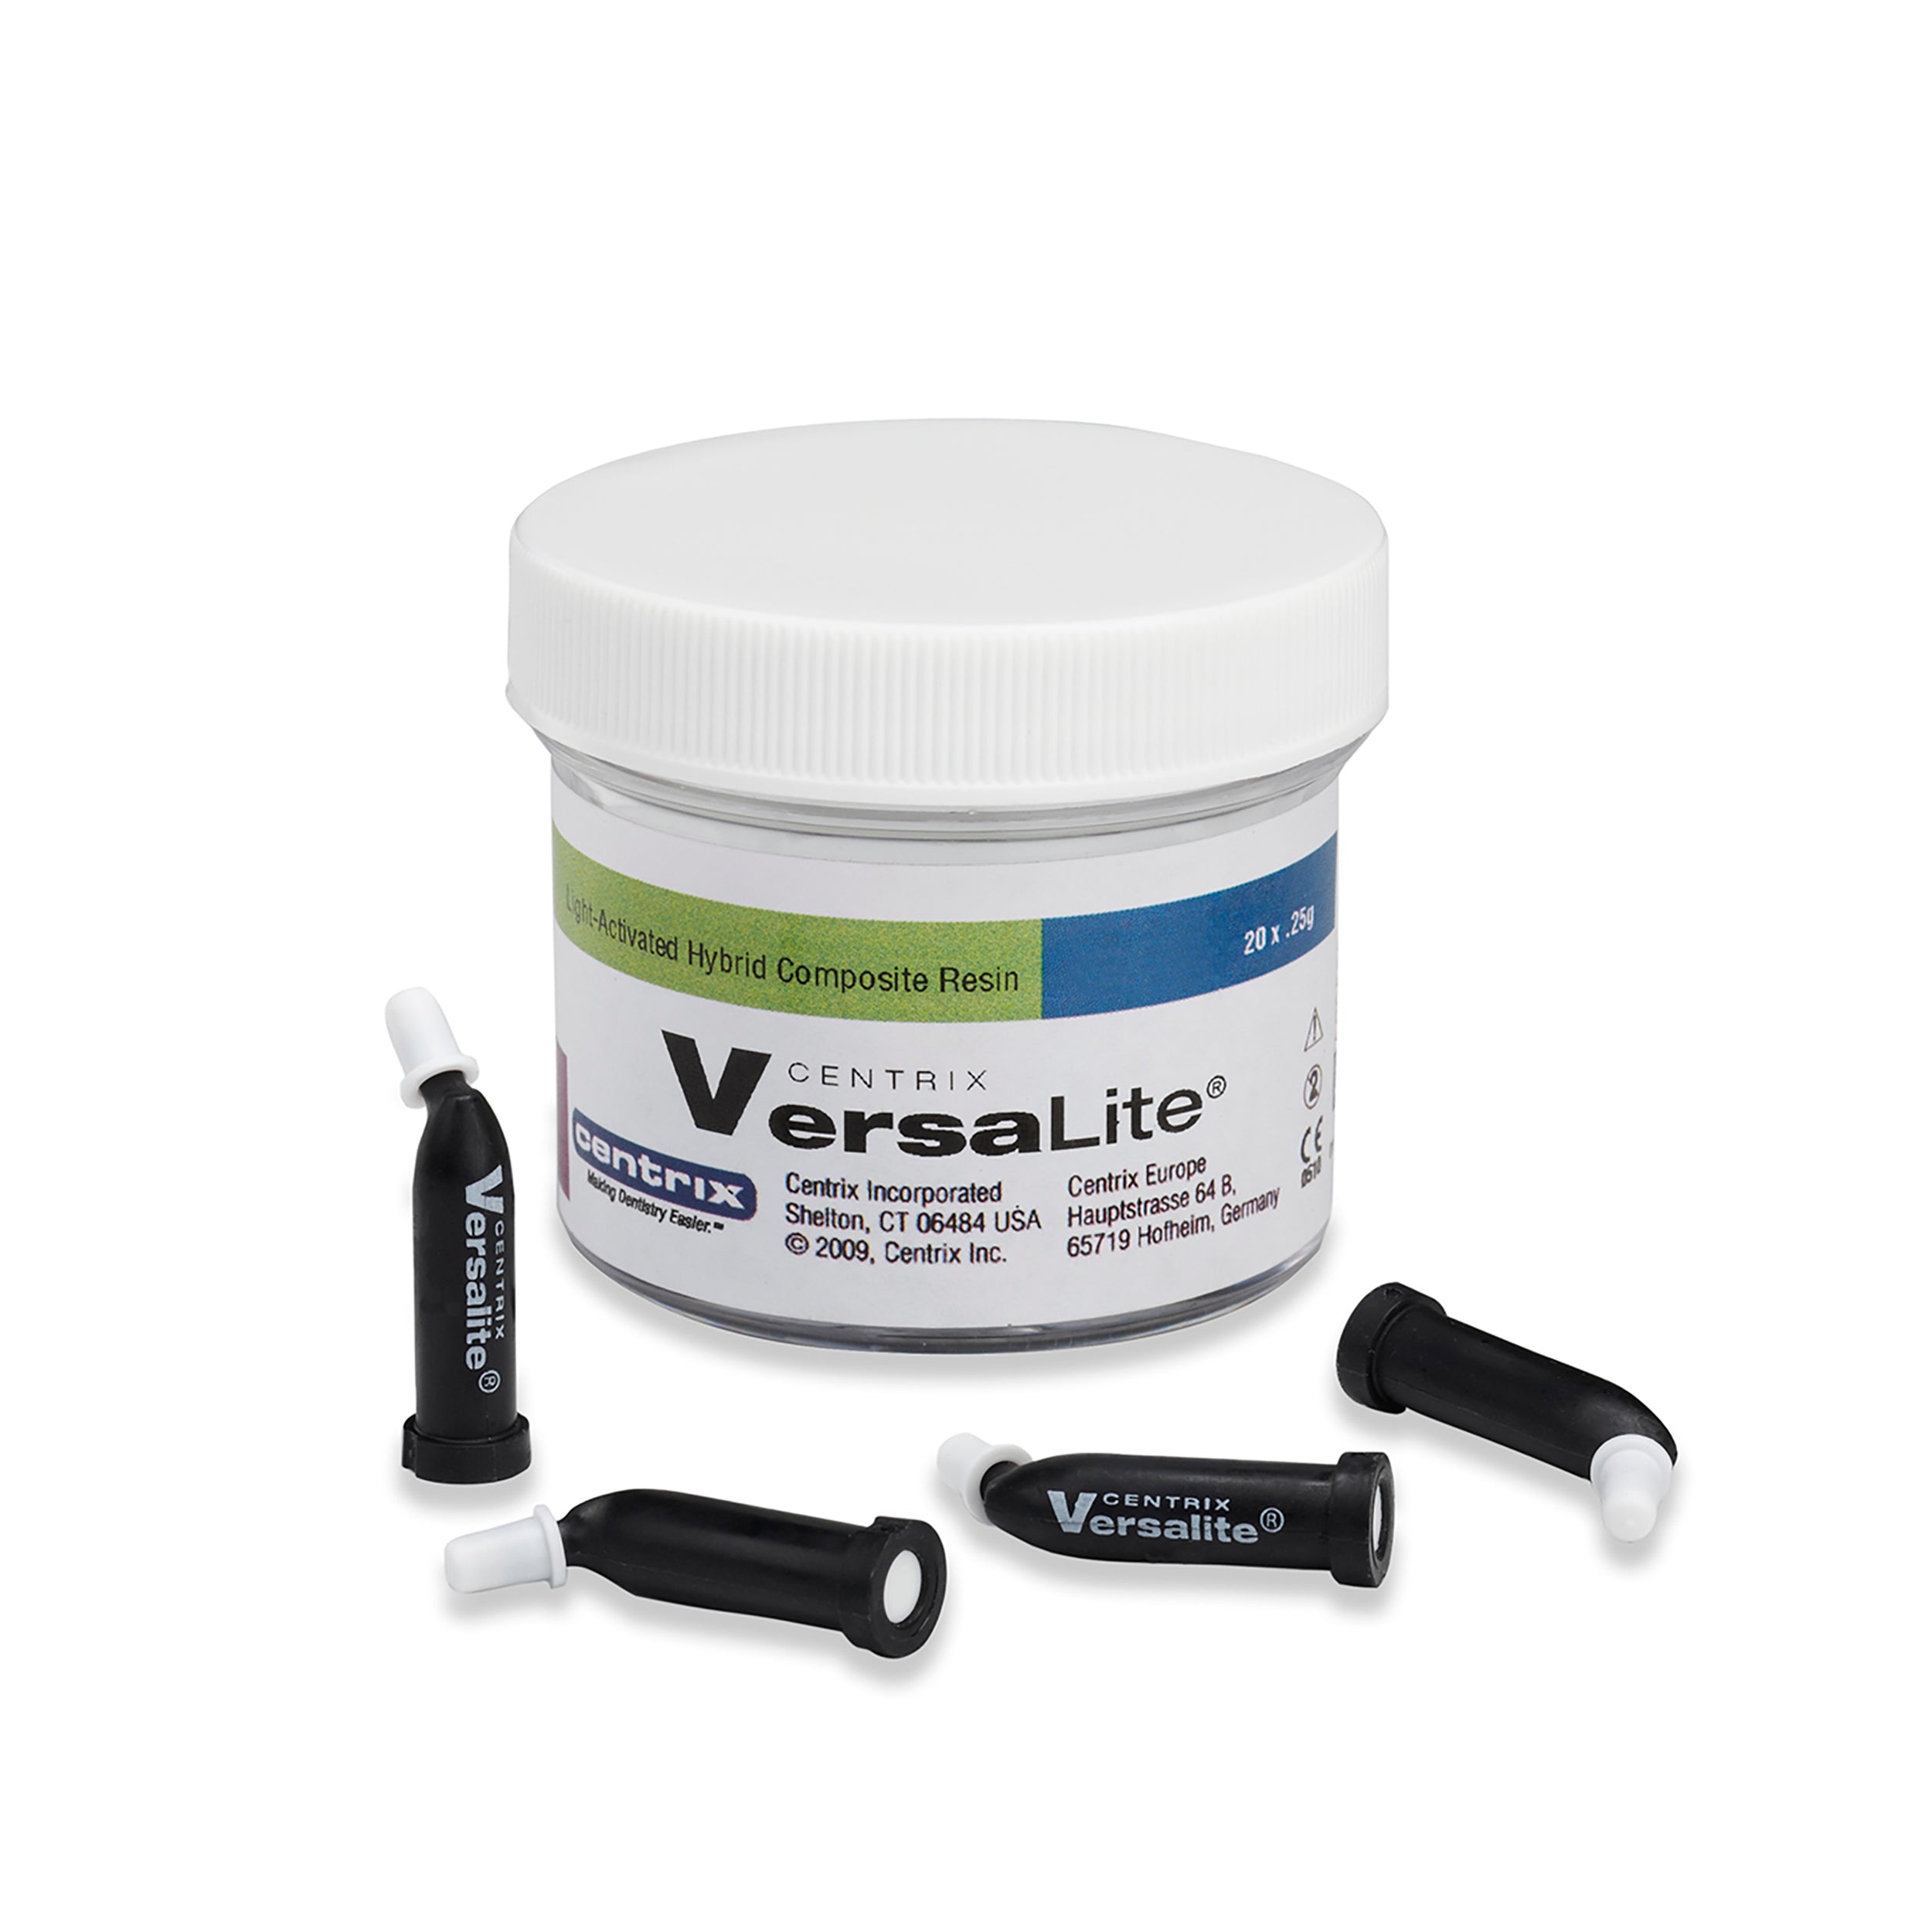 VersaLite Light-Activated Hybrid Composite Resin